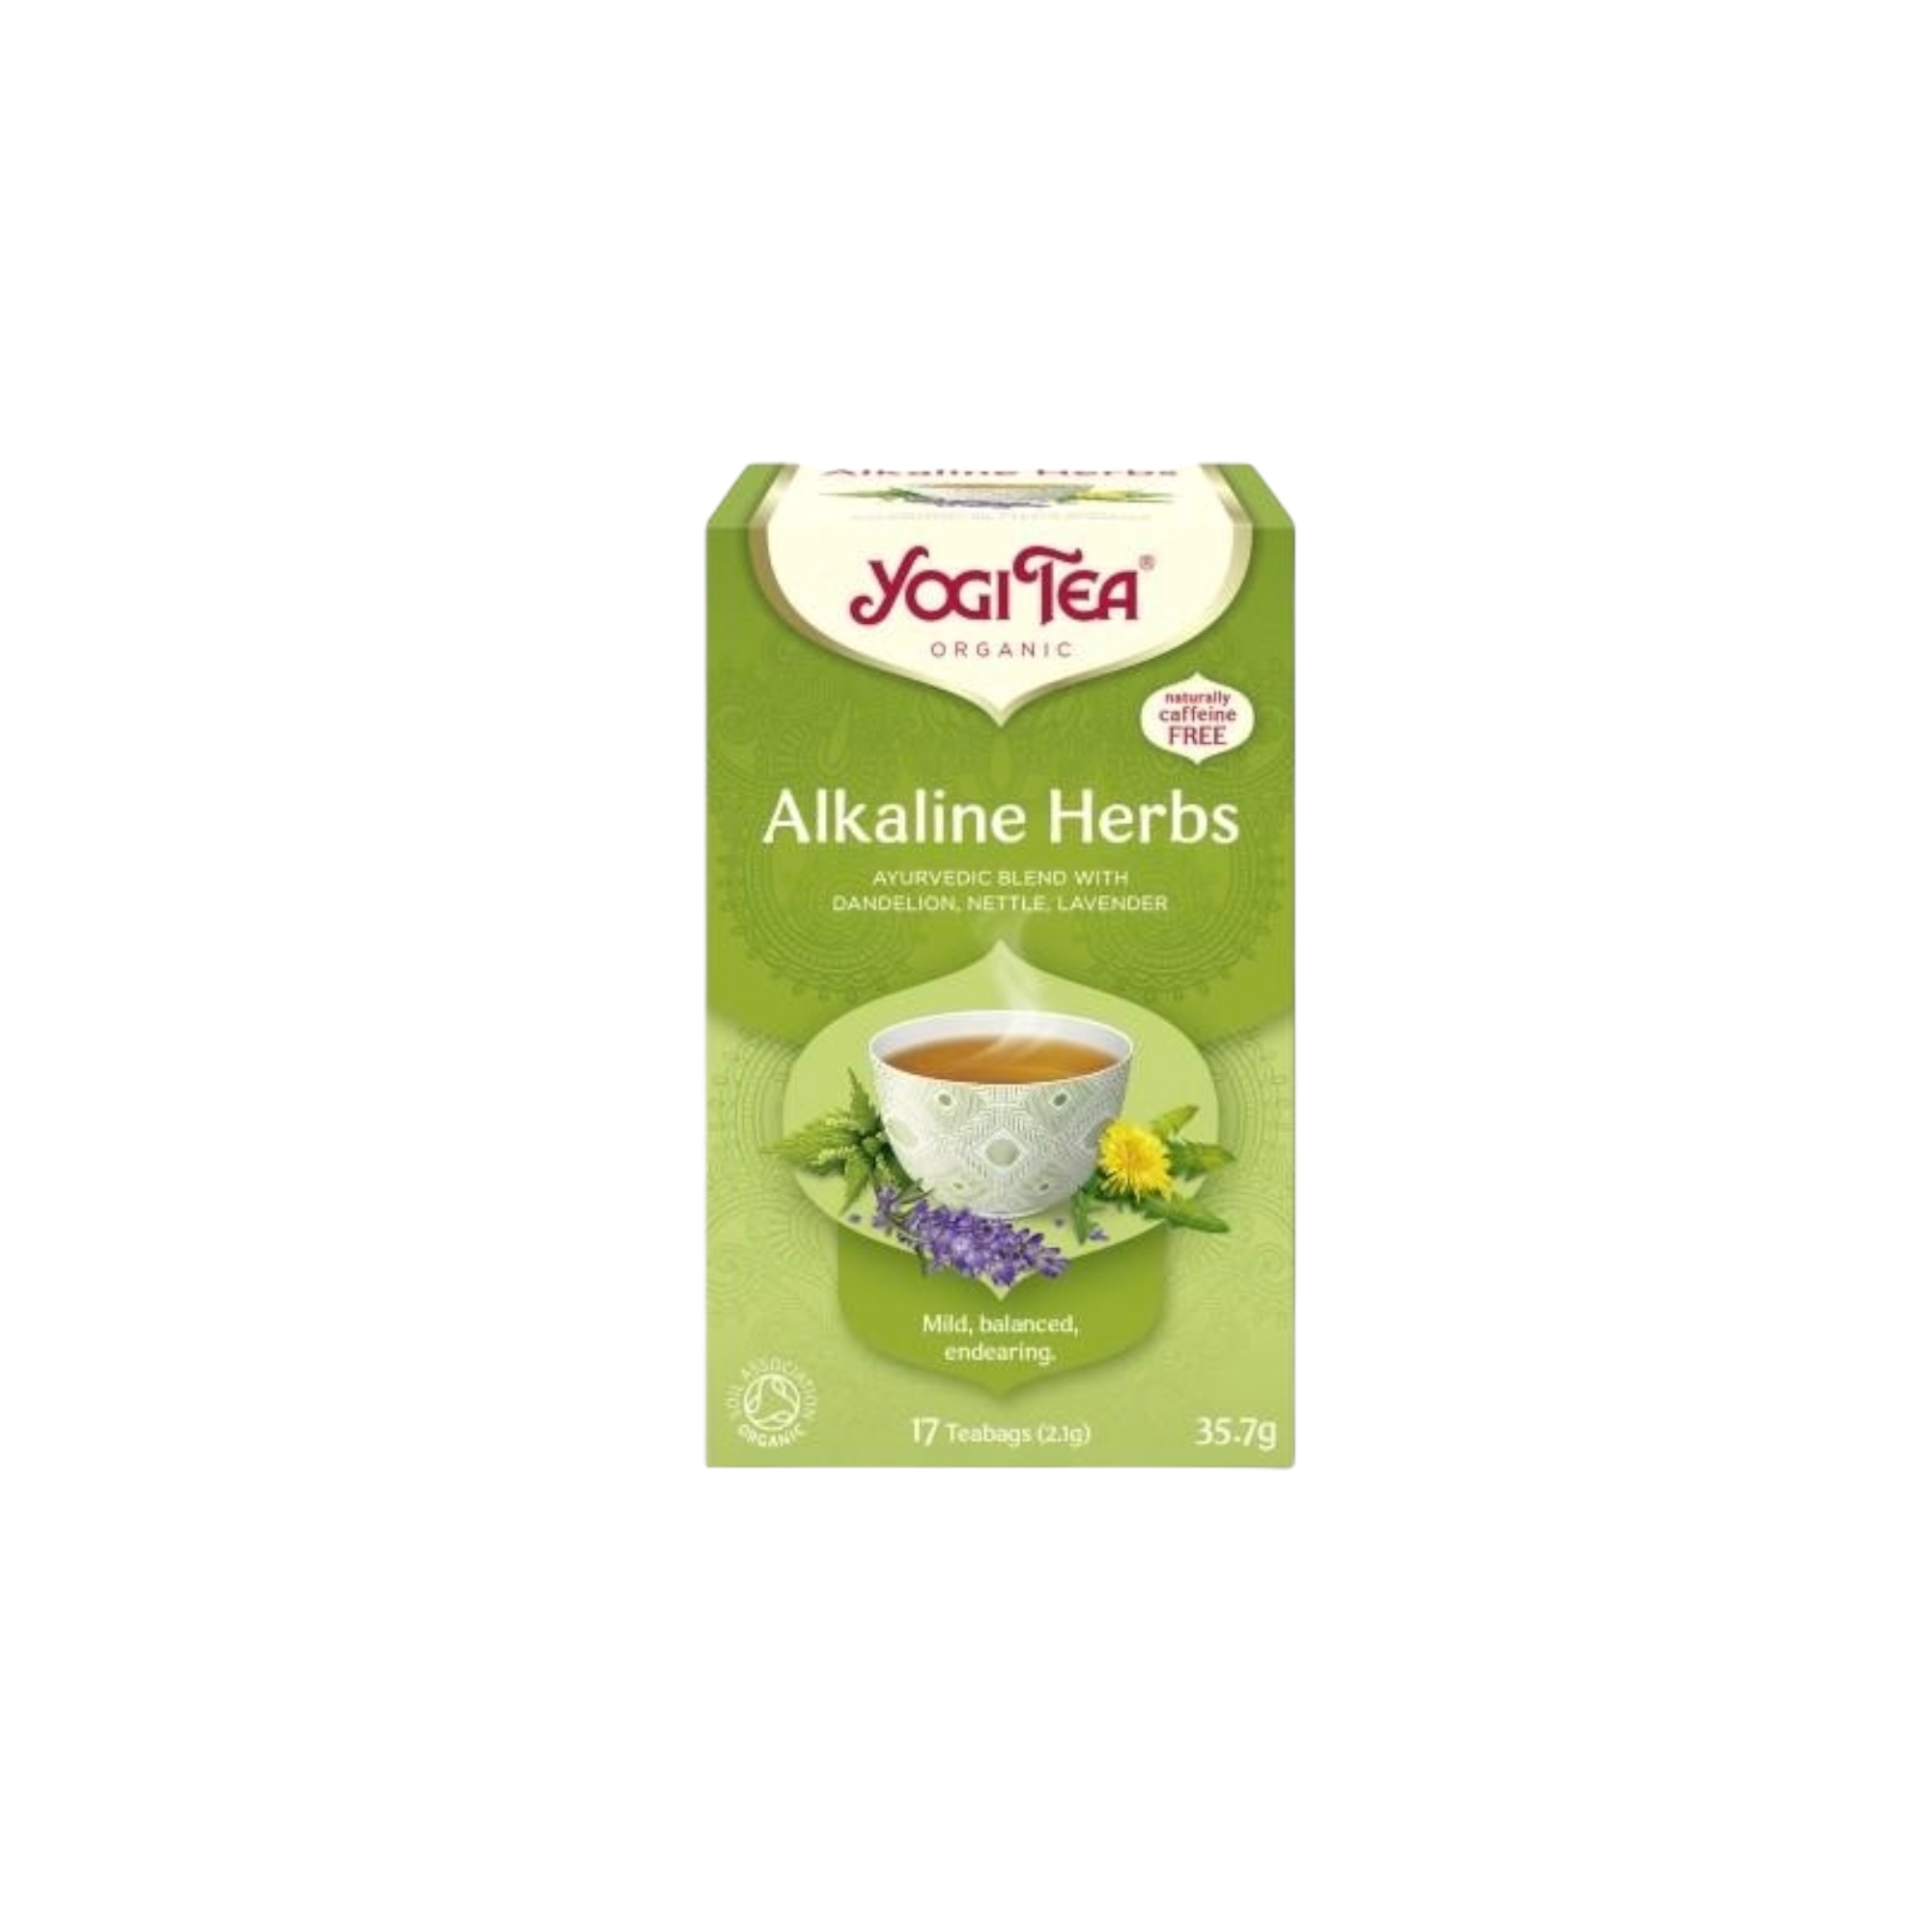 Yogi Tea Alkaline Herbs